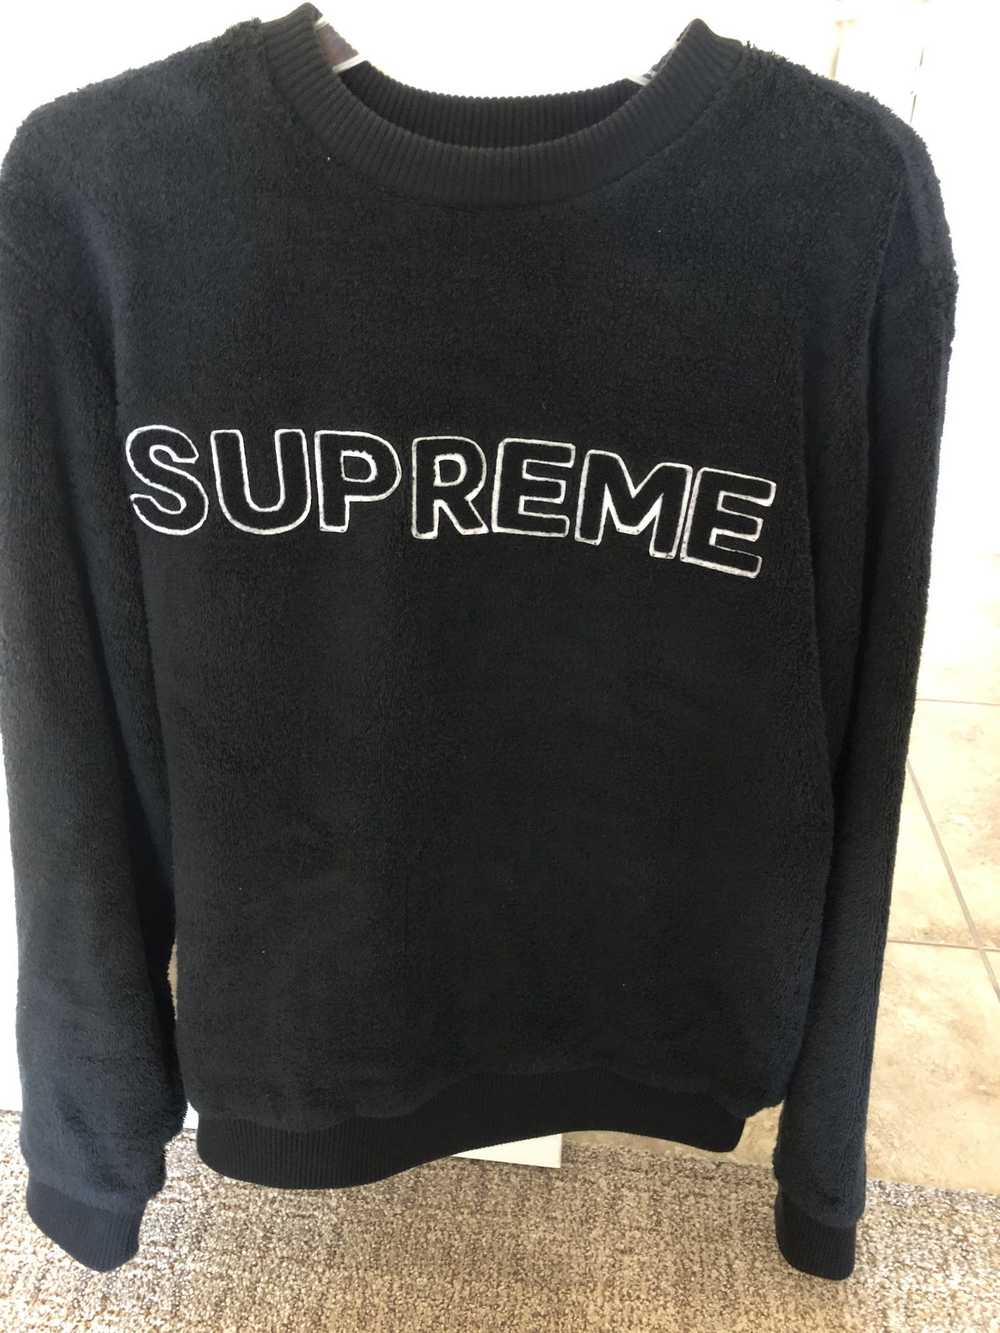 Supreme Supreme Terry Branded Sweater - image 2